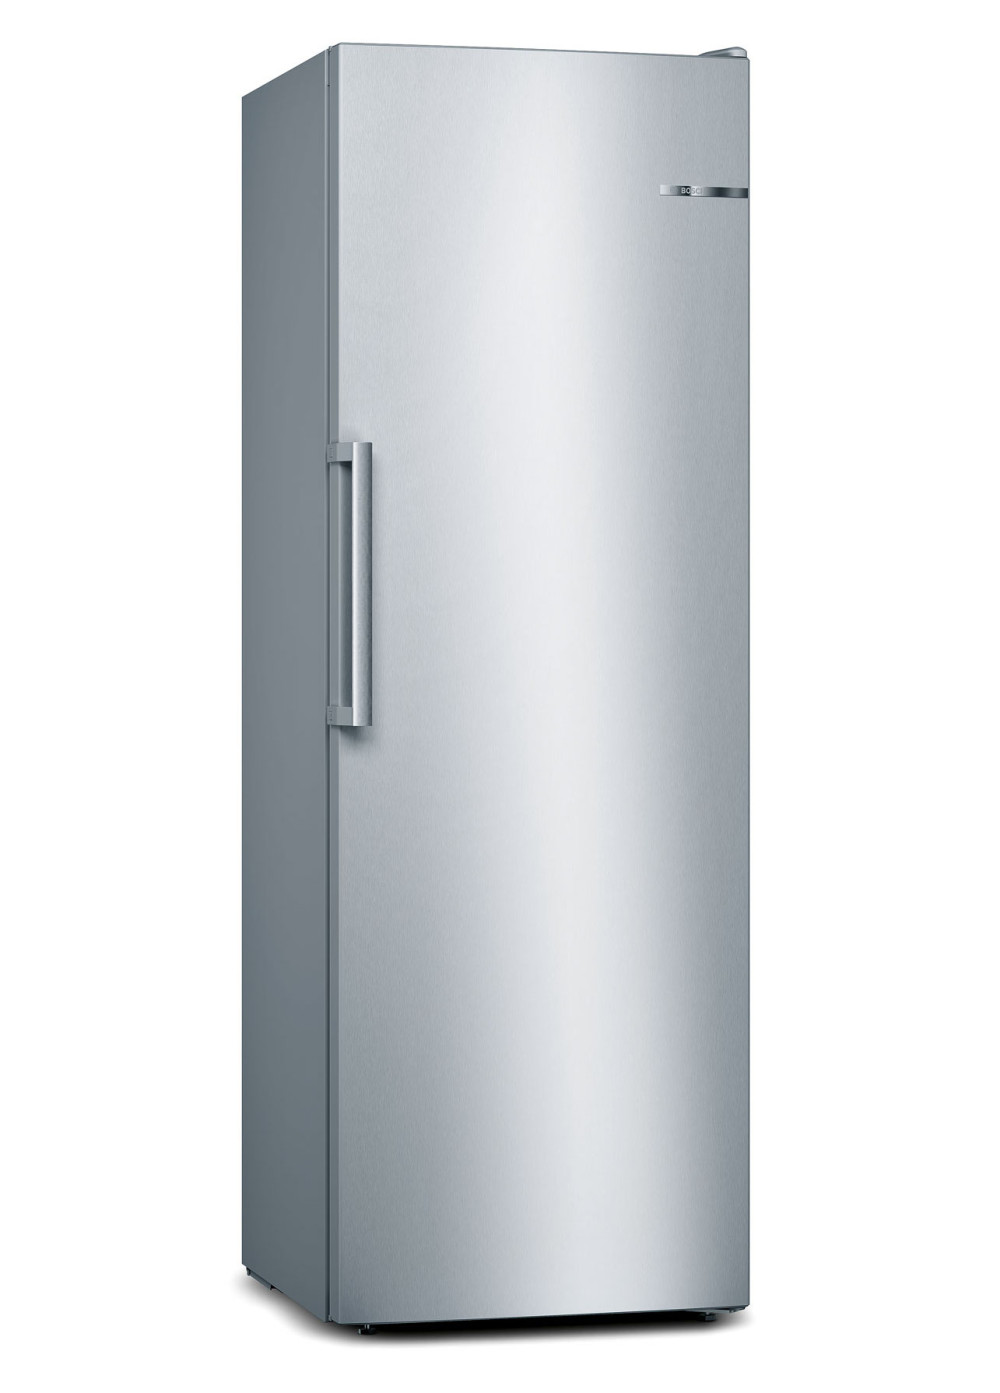 Bosch GSN33VLEPG Series 4 Freestanding Freezer featured image